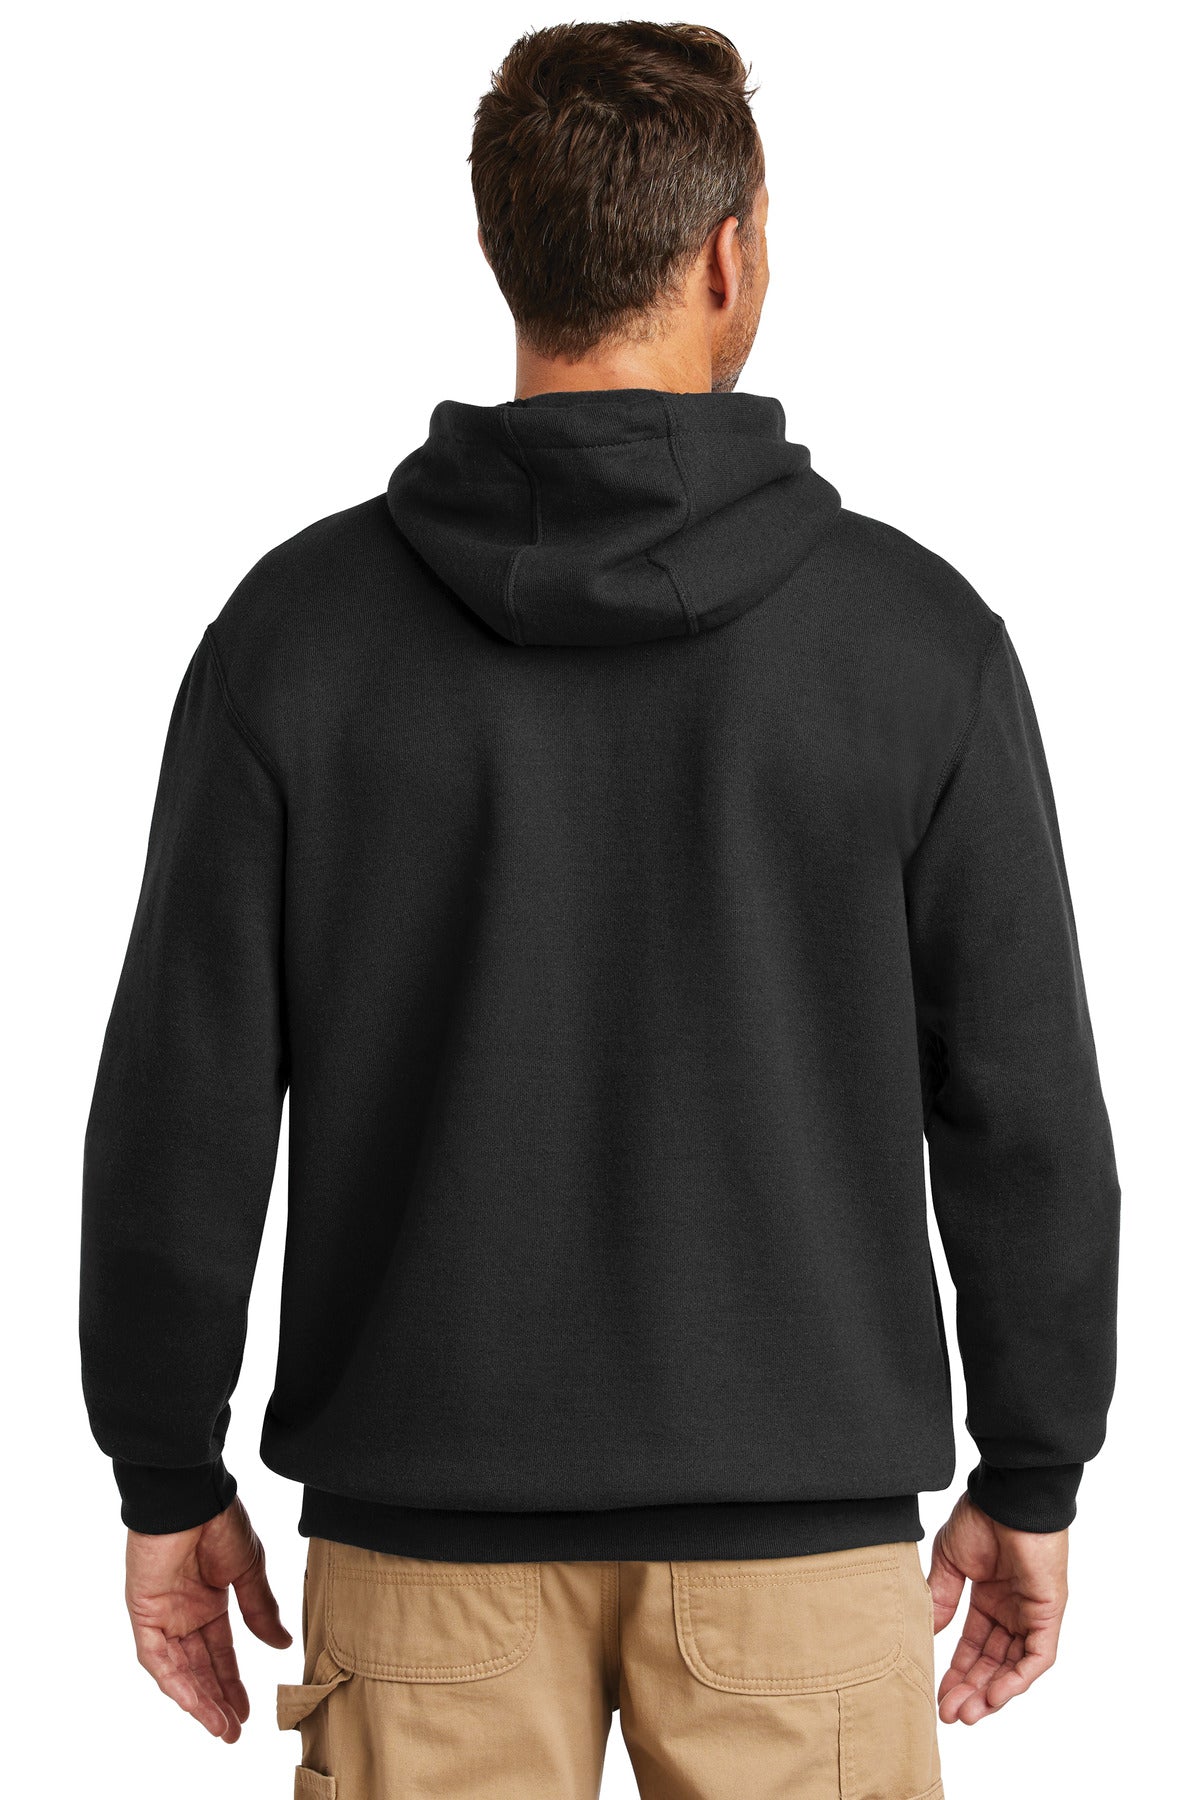 Carhartt® Tall Midweight Hooded Sweatshirt CTTK121 - DFW Impression